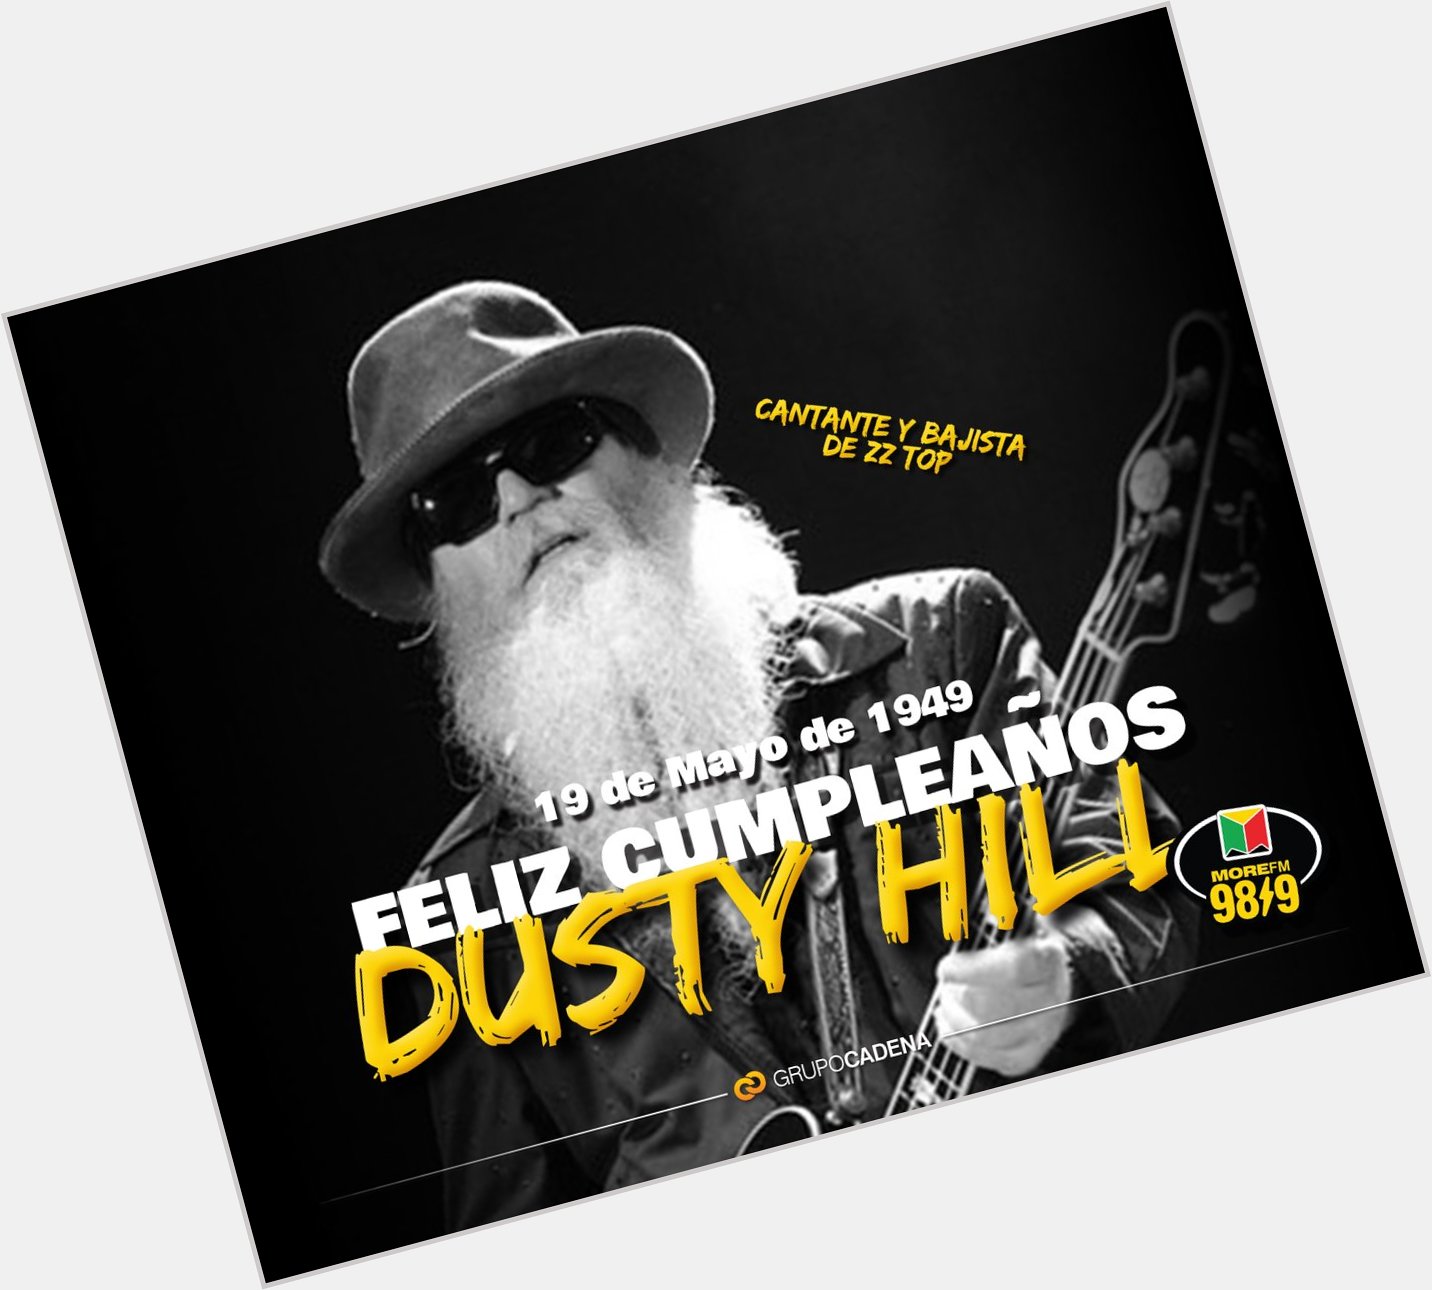  | ¡Happy birthday Dusty Hill!  Síguenos en instagram :  